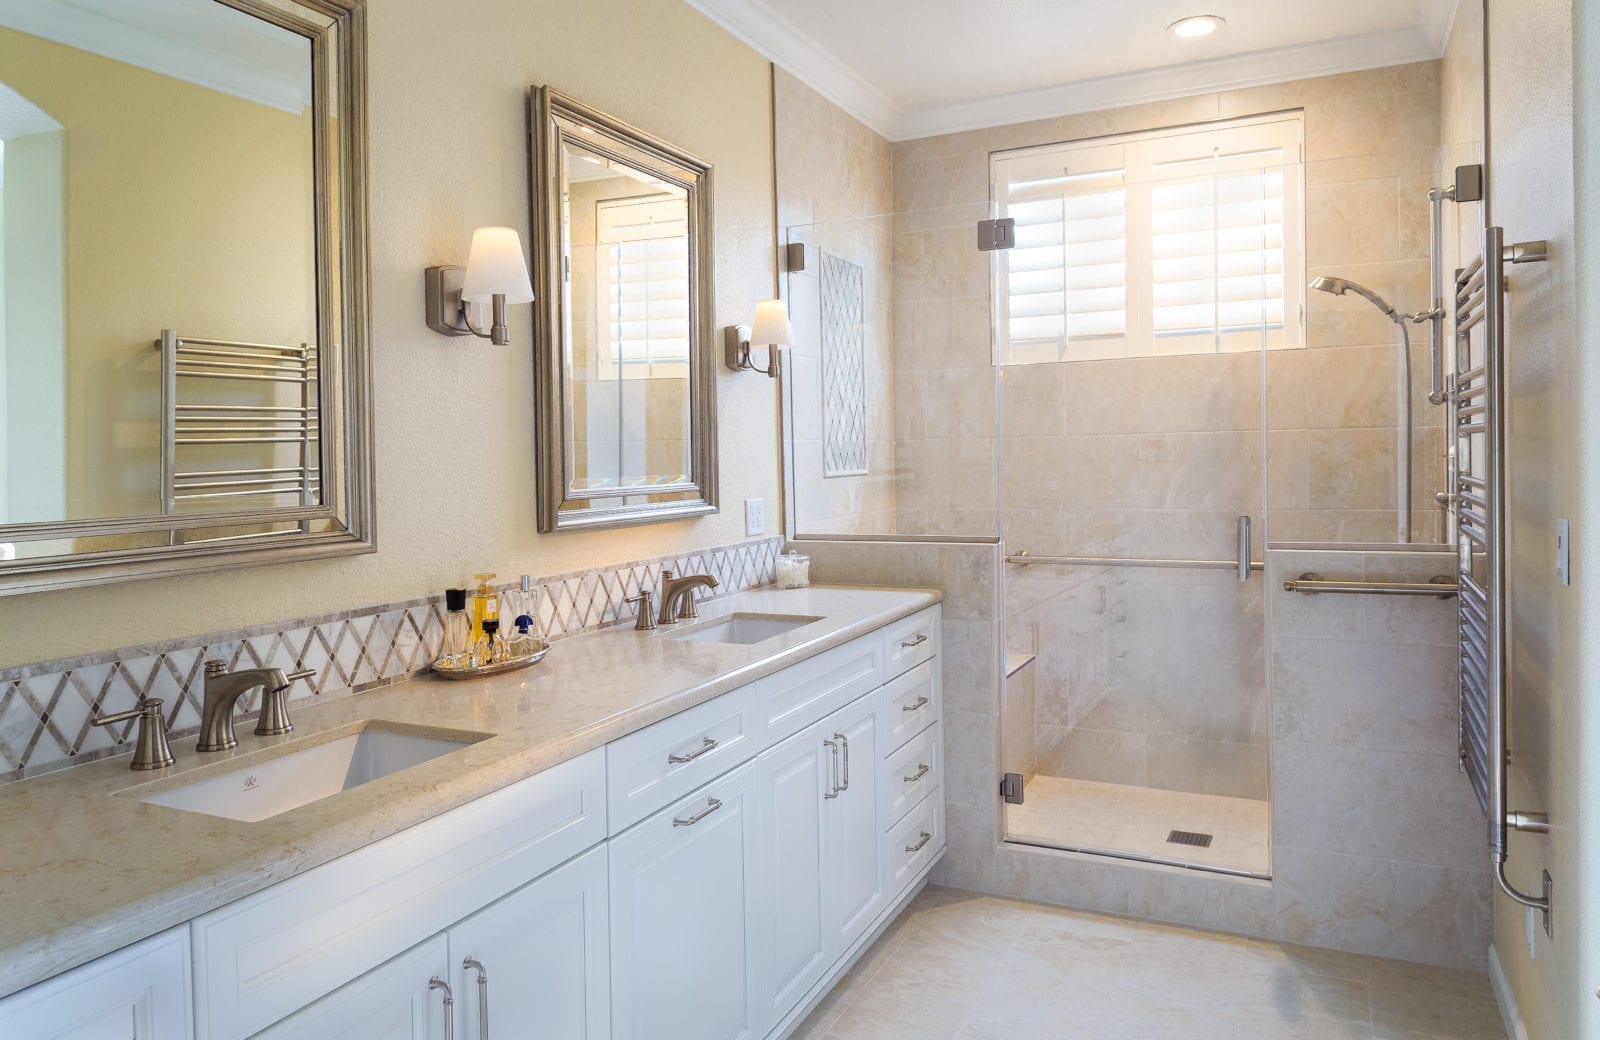 Classically Elegant Master and Hall Bathroom Designs